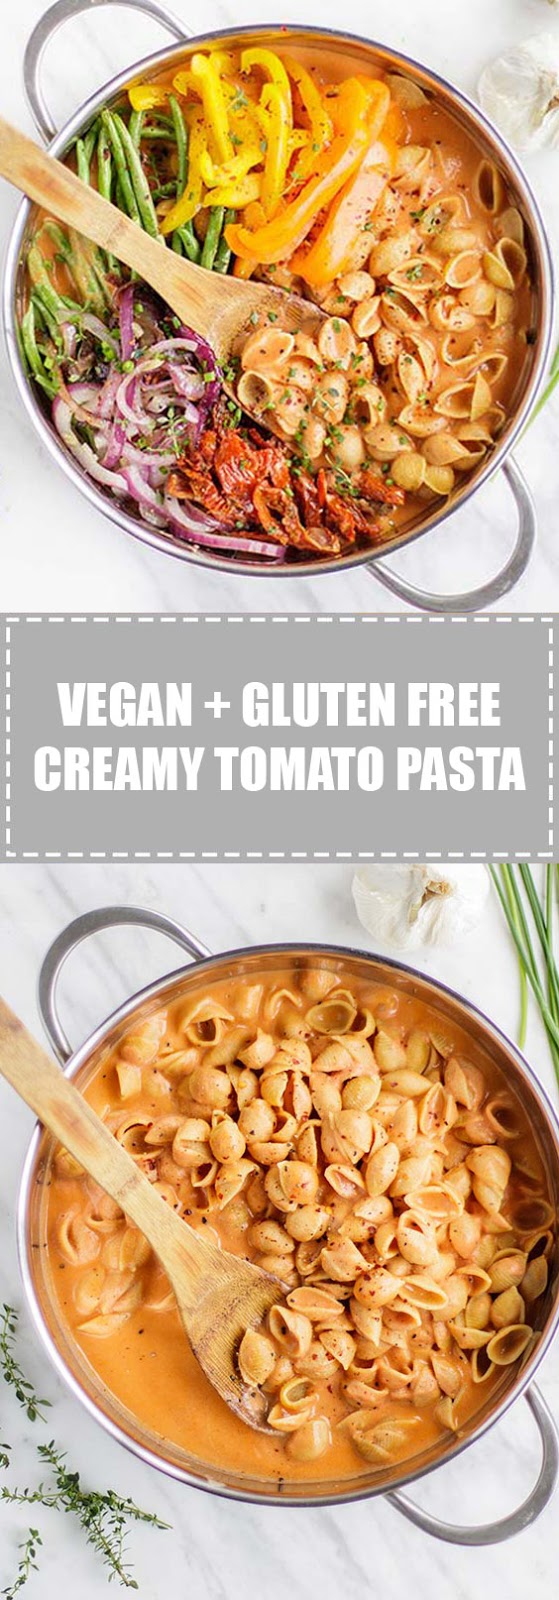 Vegan + Gluten Free Creamy Tomato Pasta